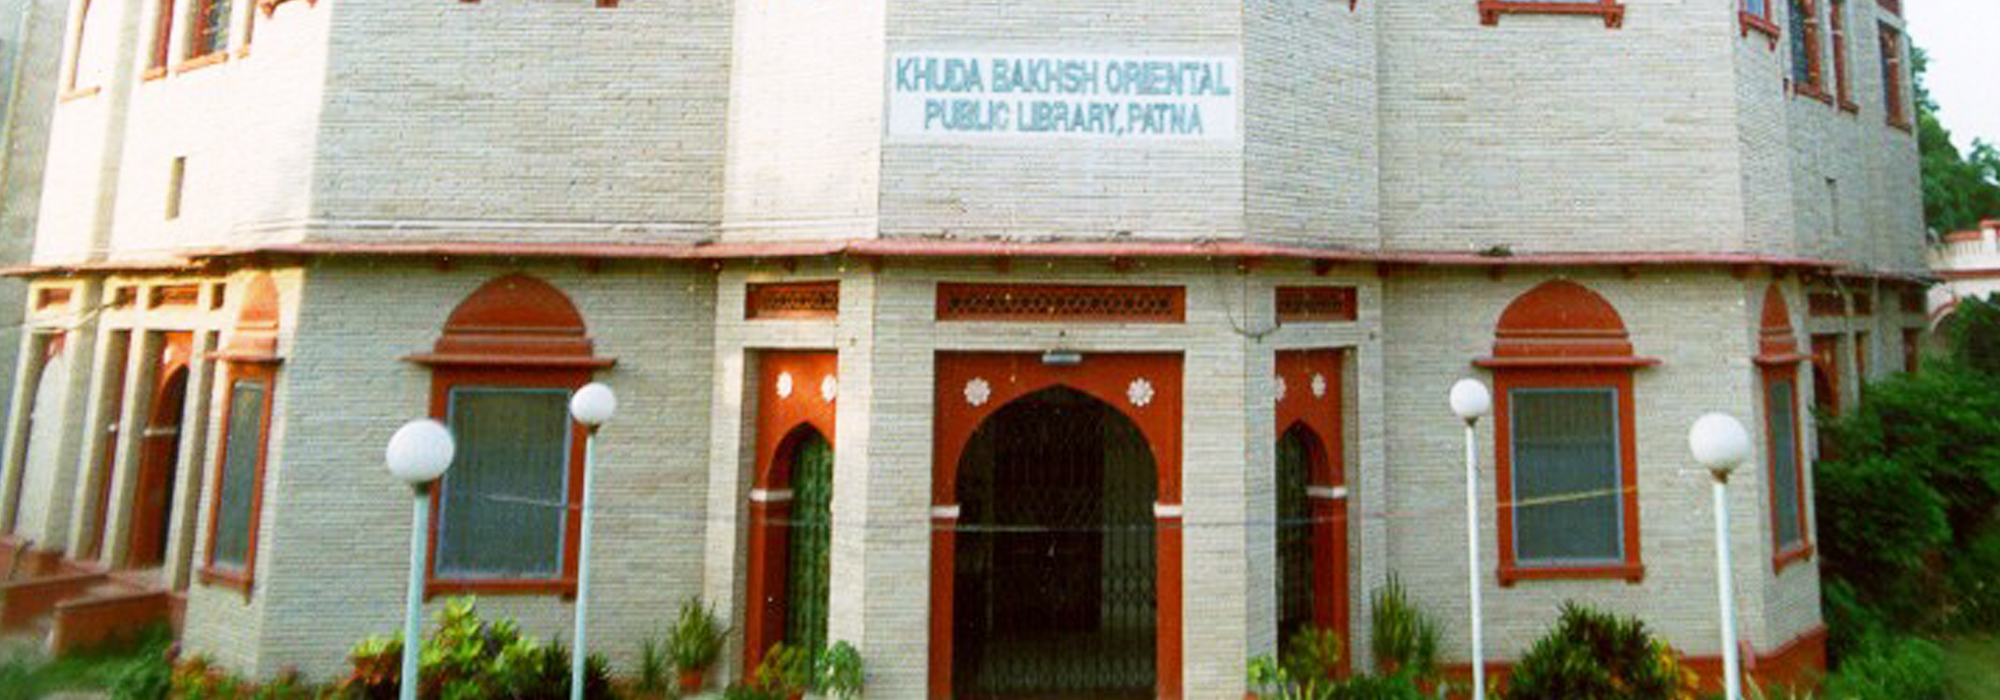 Khuda Bakhsh Oriental Public Library